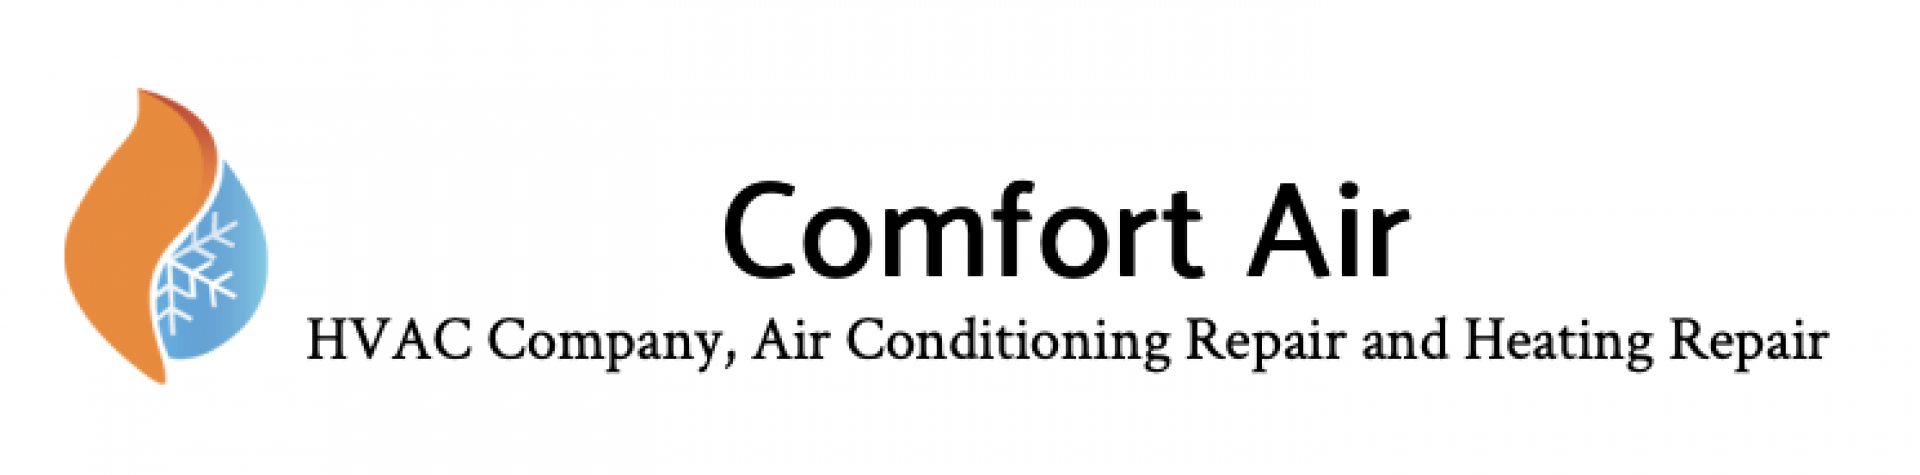 Comfort Air company logo